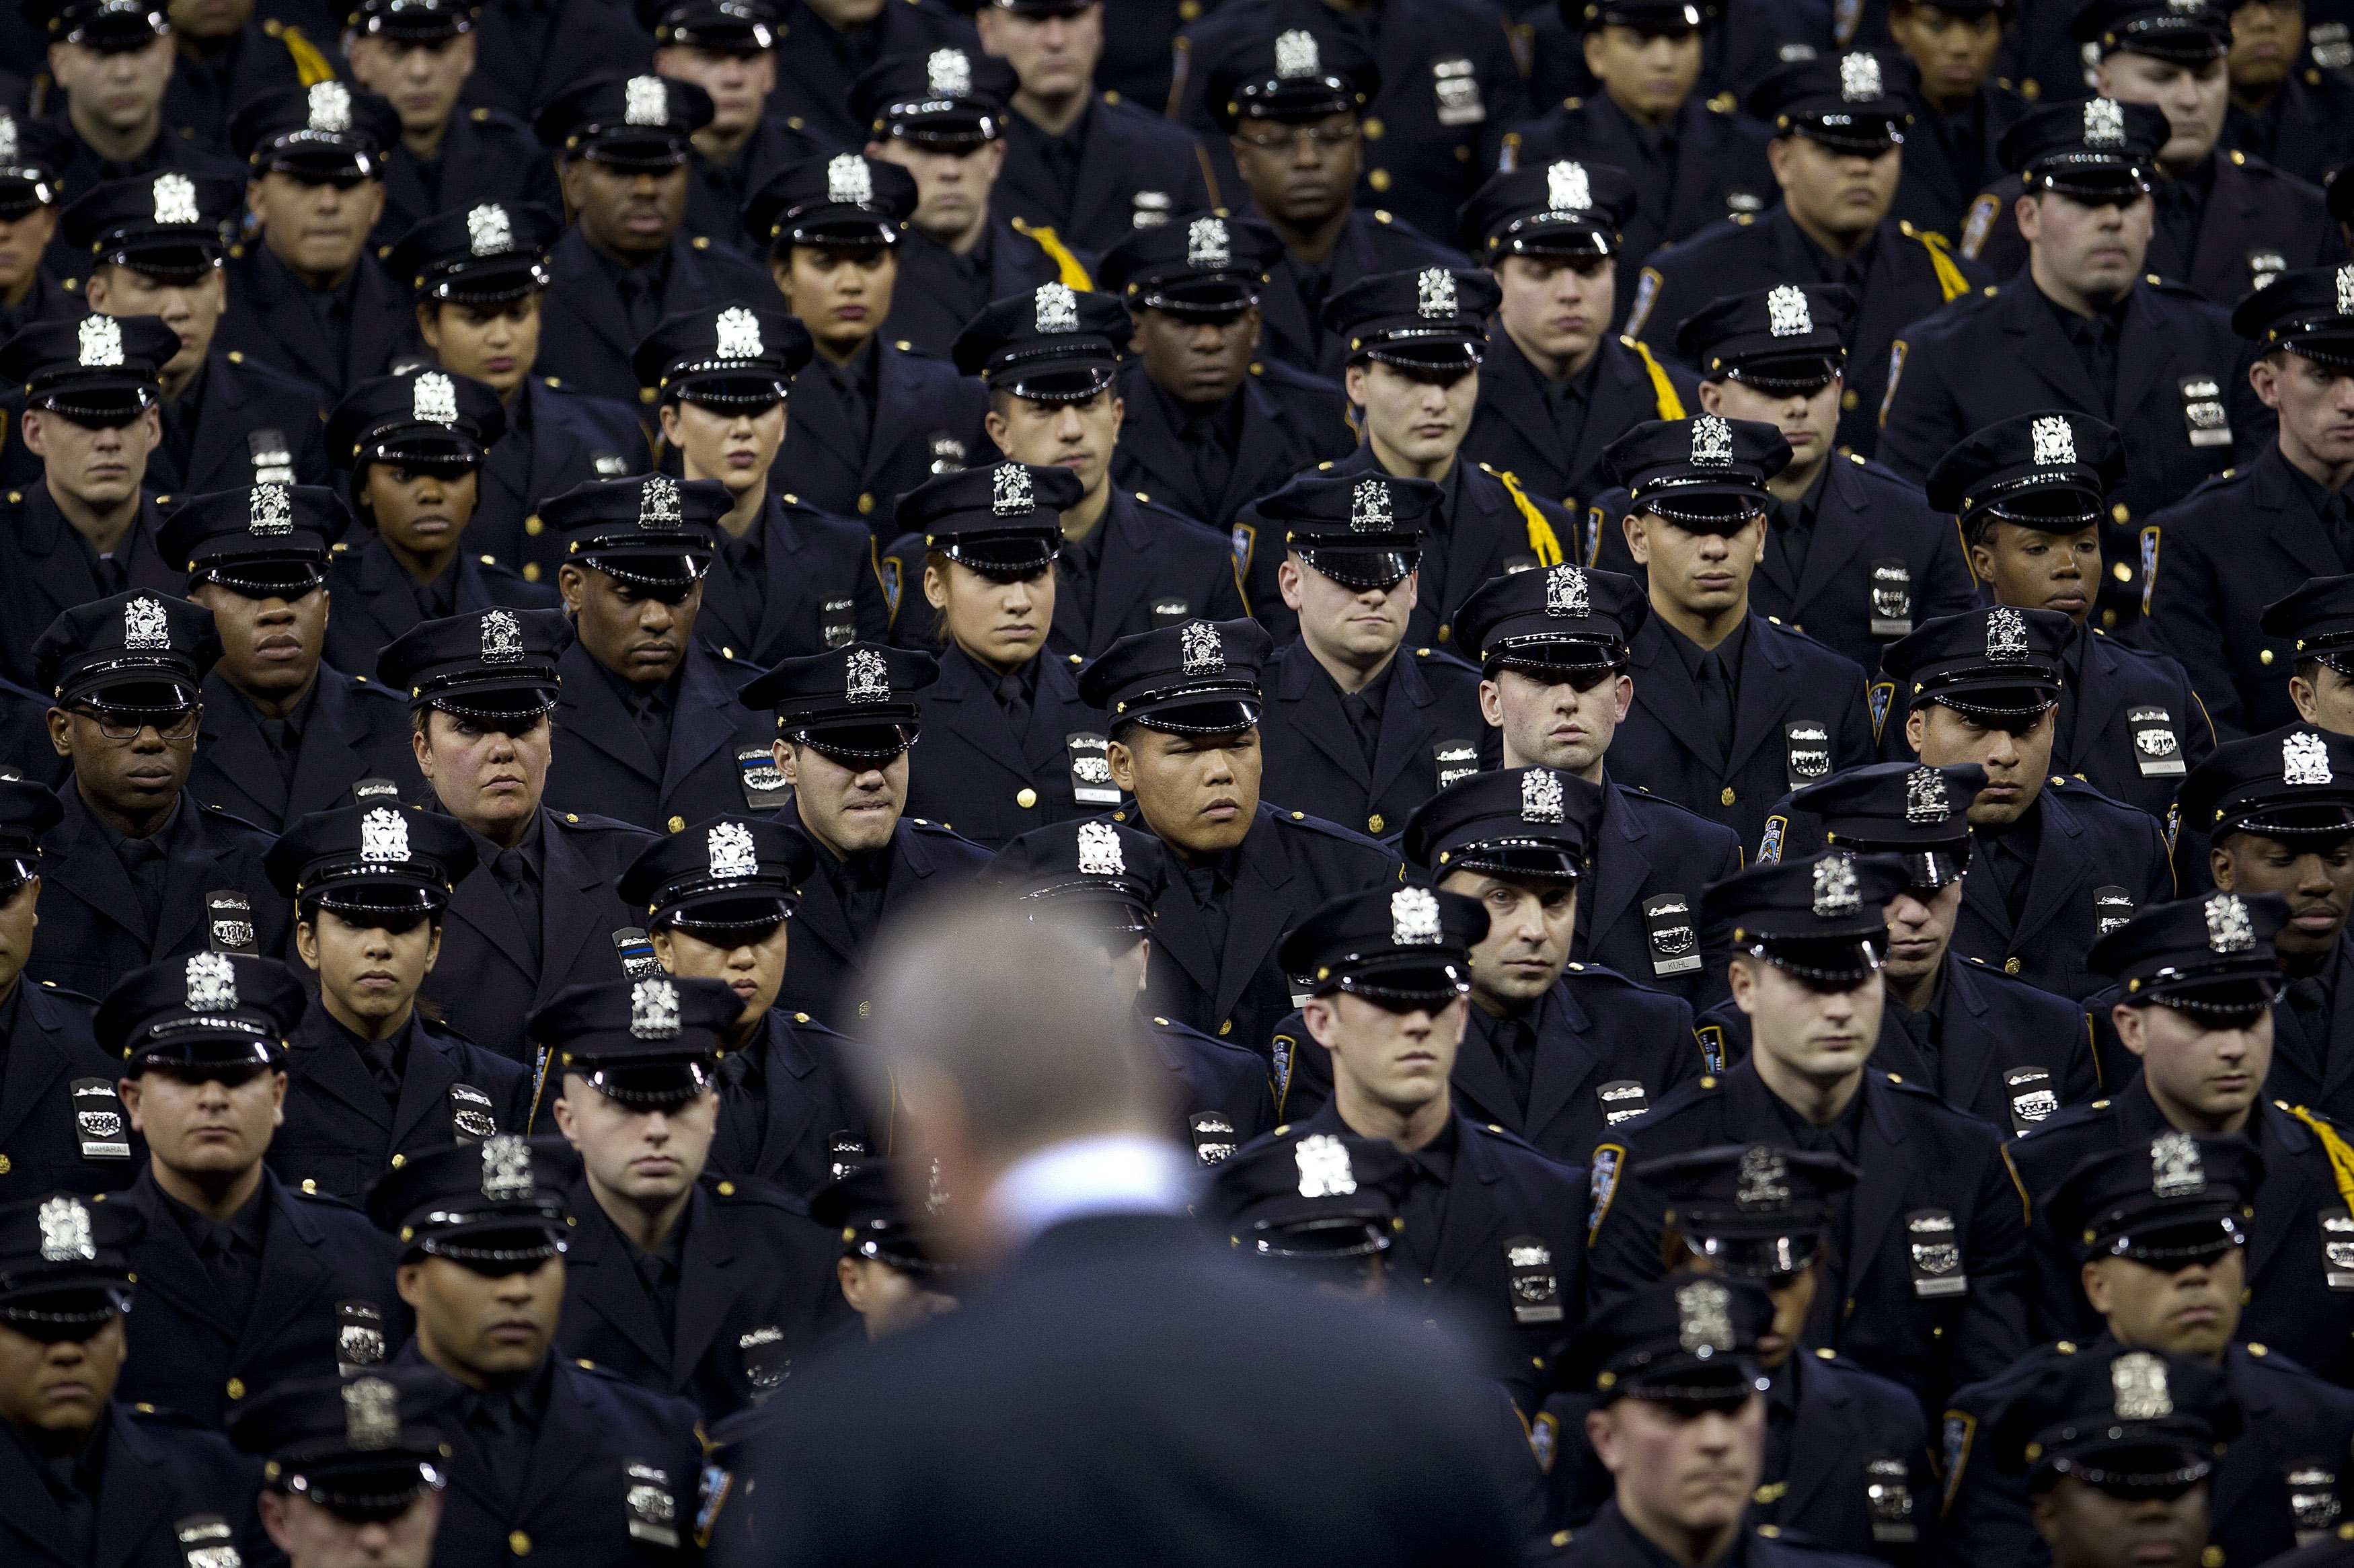 New York Mayor Bill de Blasio speaks from the podium to the New York City Police Academy Graduating class in New Yorkon Dec. 29, 2014. (Carlo Allegri—Reuters)